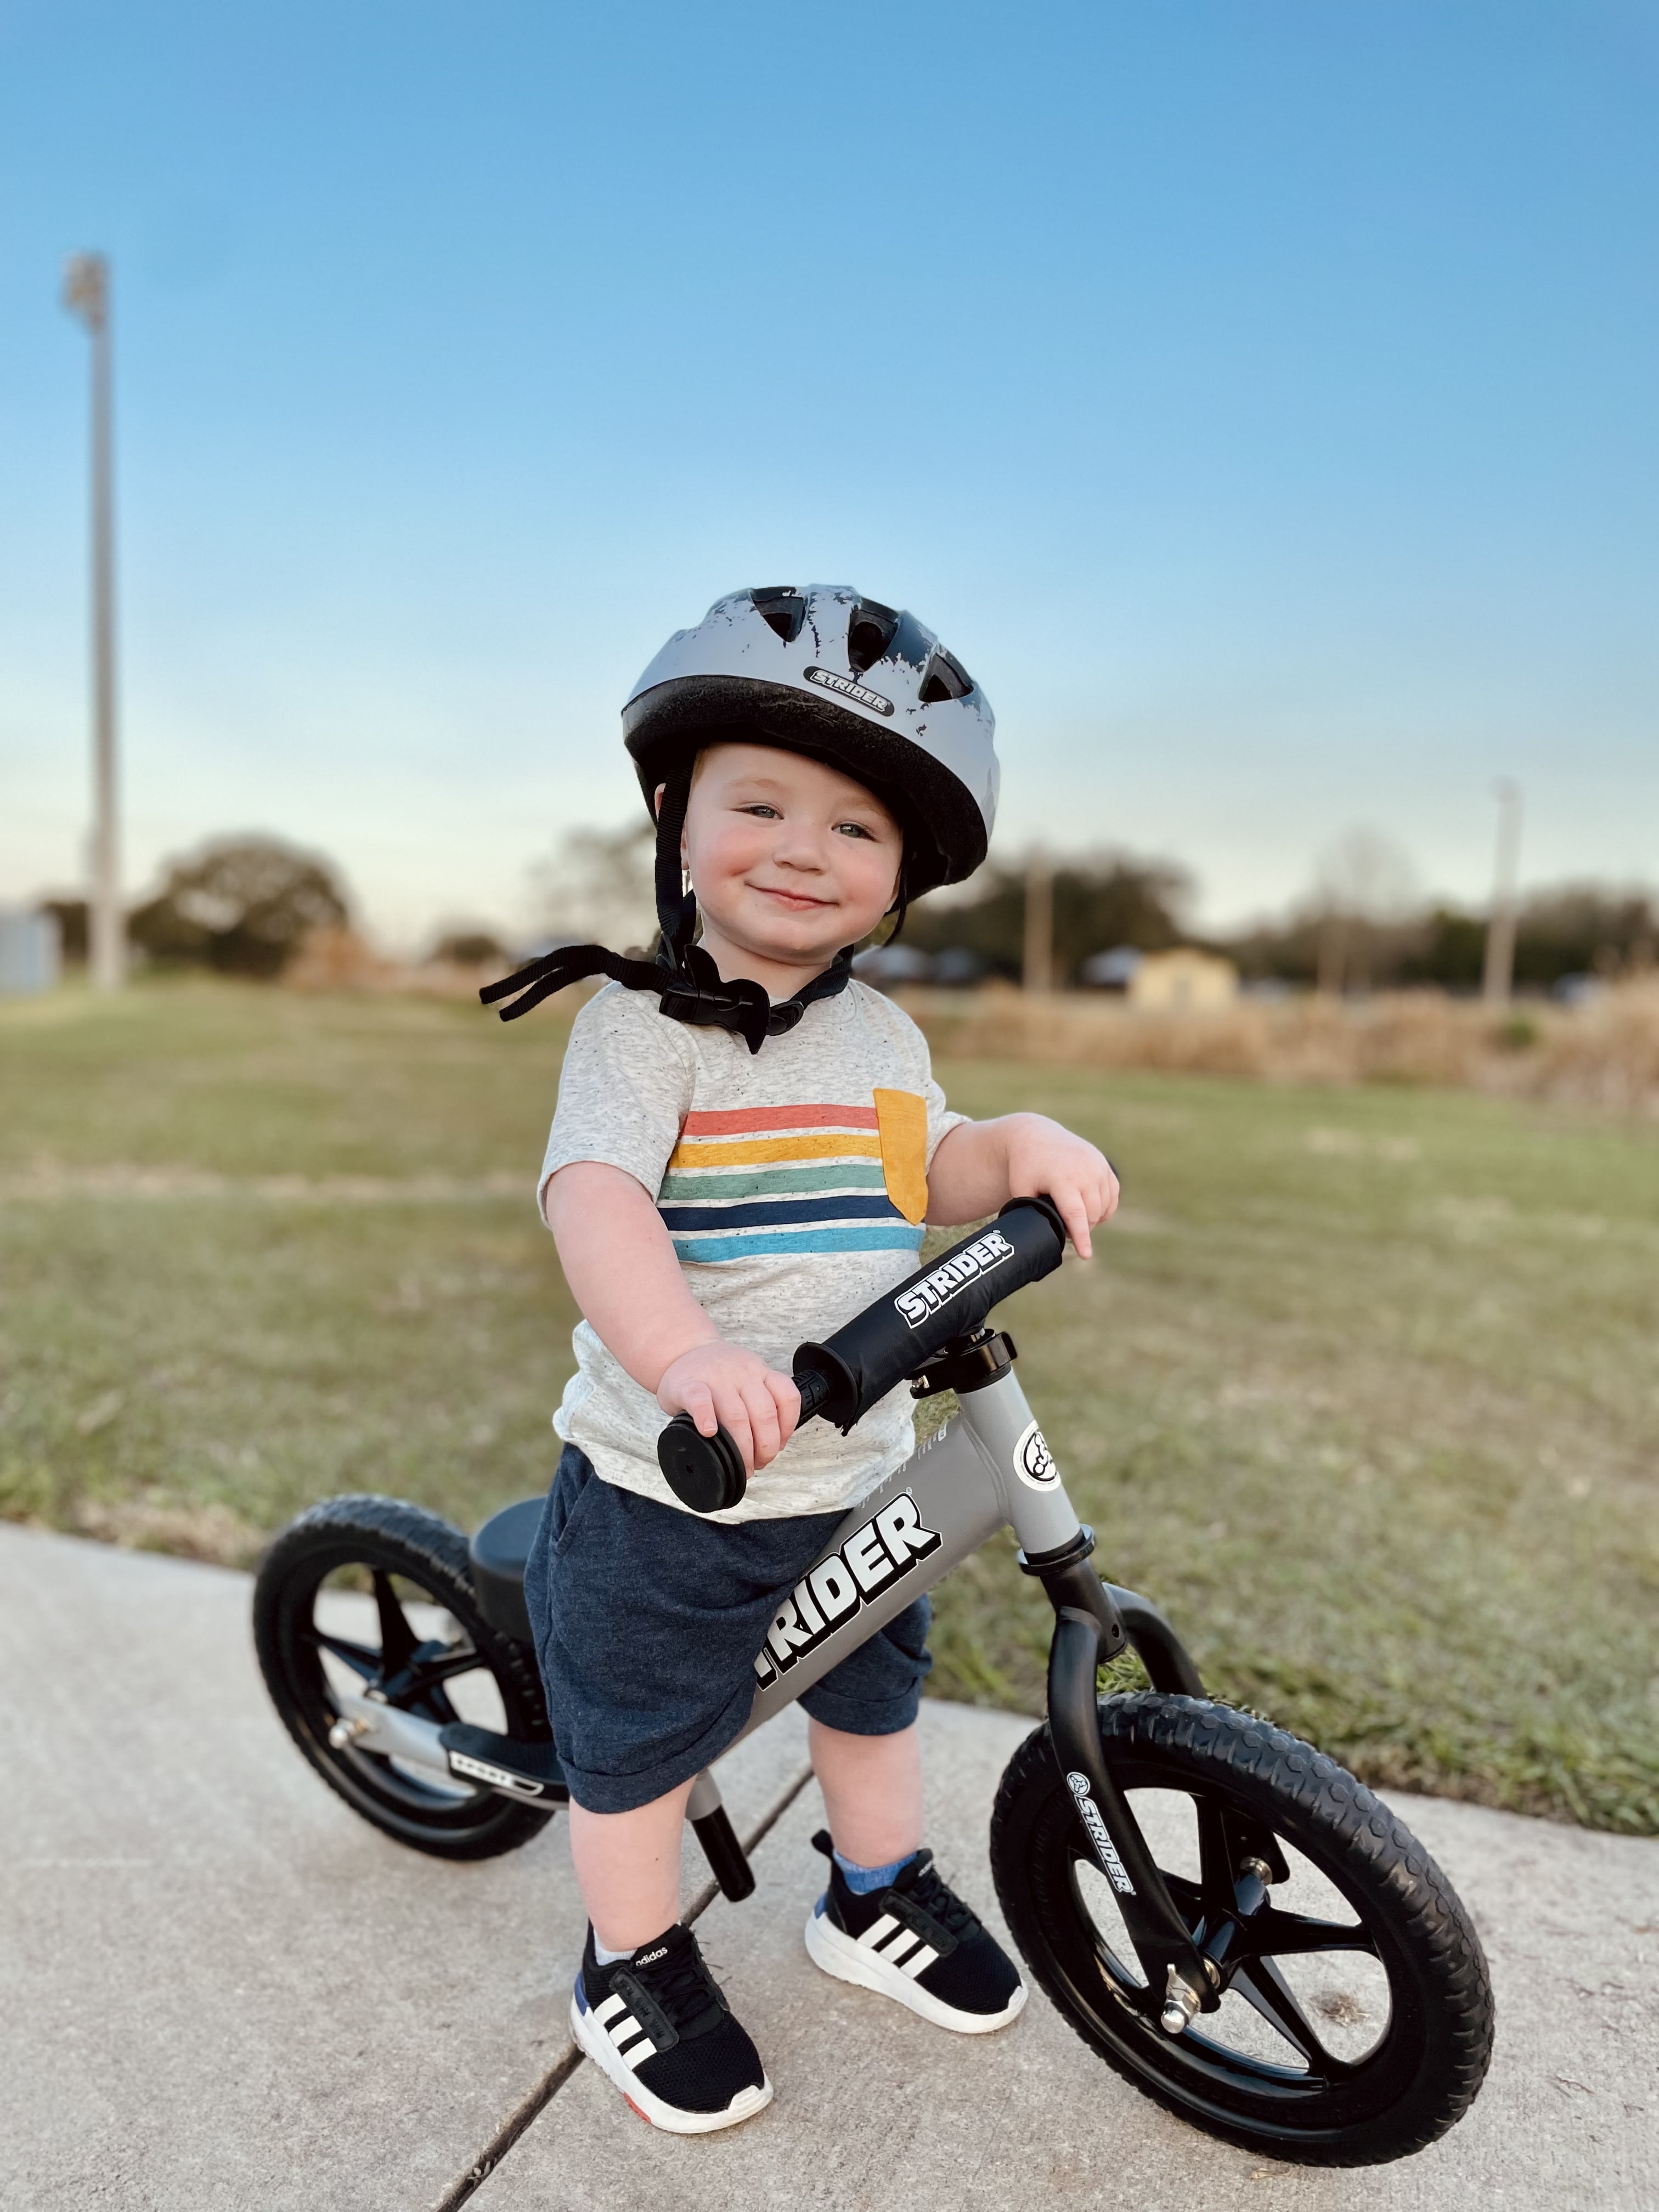 Strider - 12 Sport Balance Bike, Ages 18 Months to 5 Years - Matte Gray